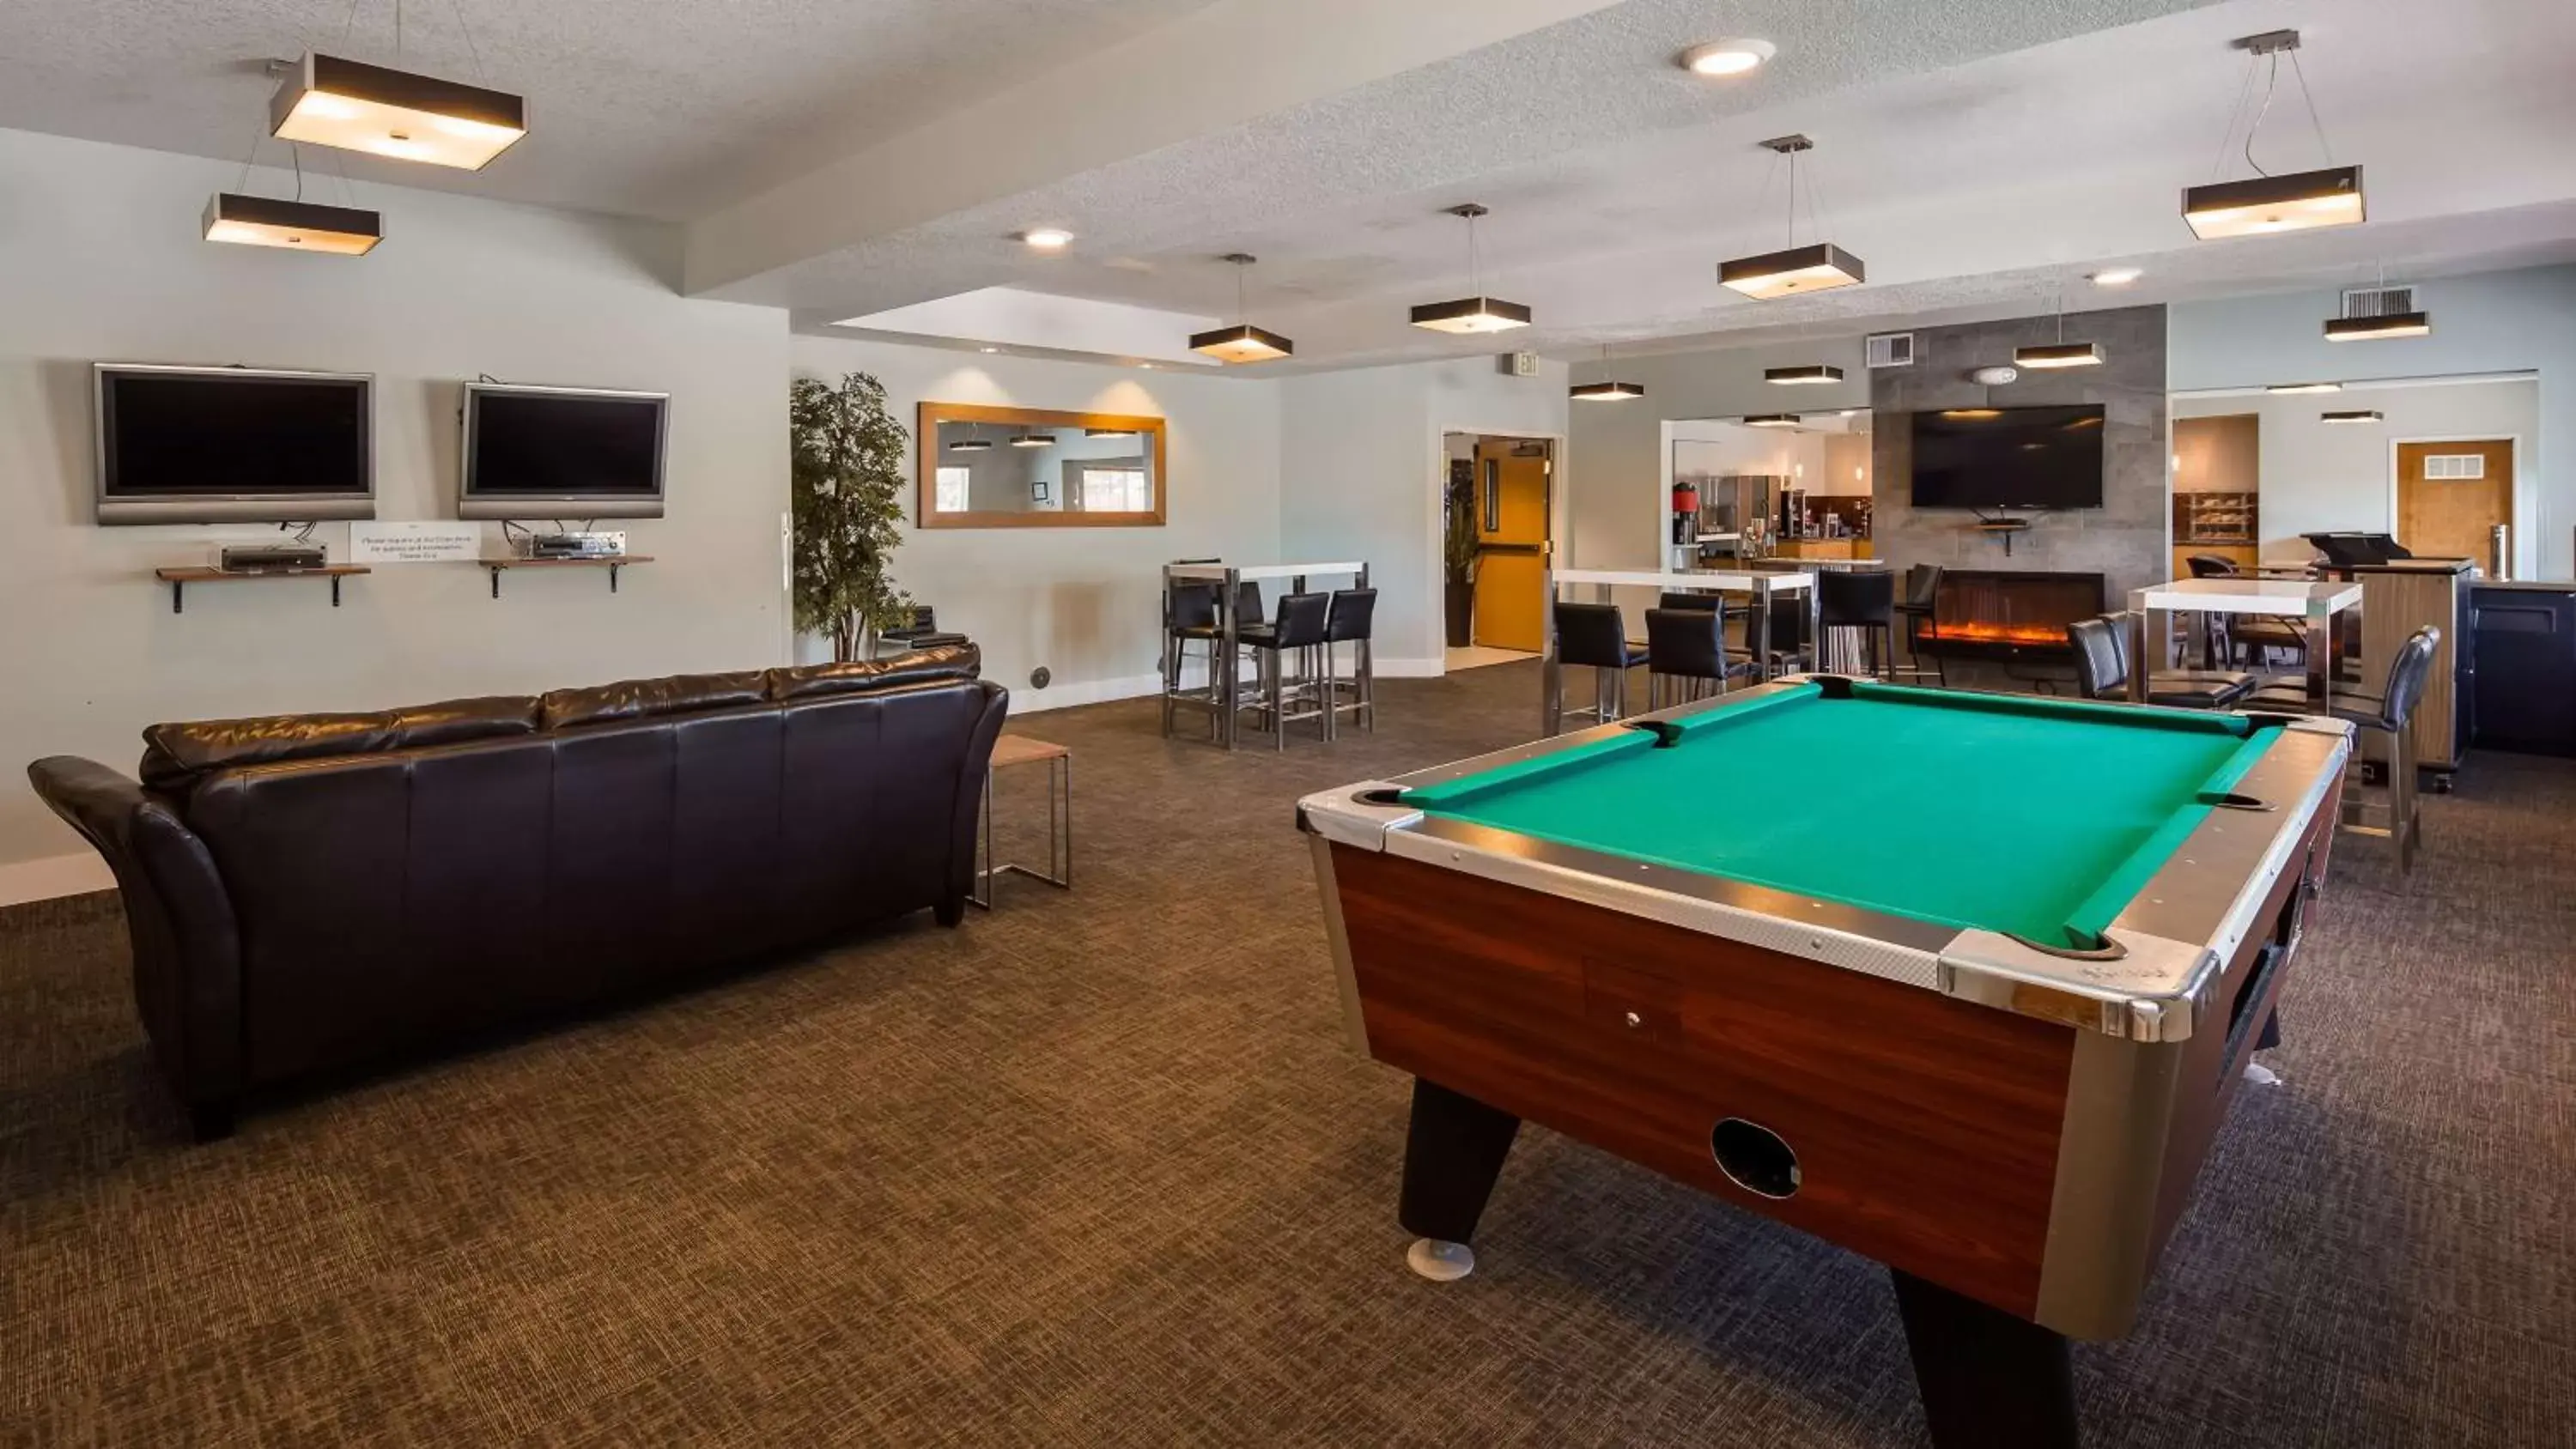 On site, Billiards in Best Western Plus Liberty Lake Inn